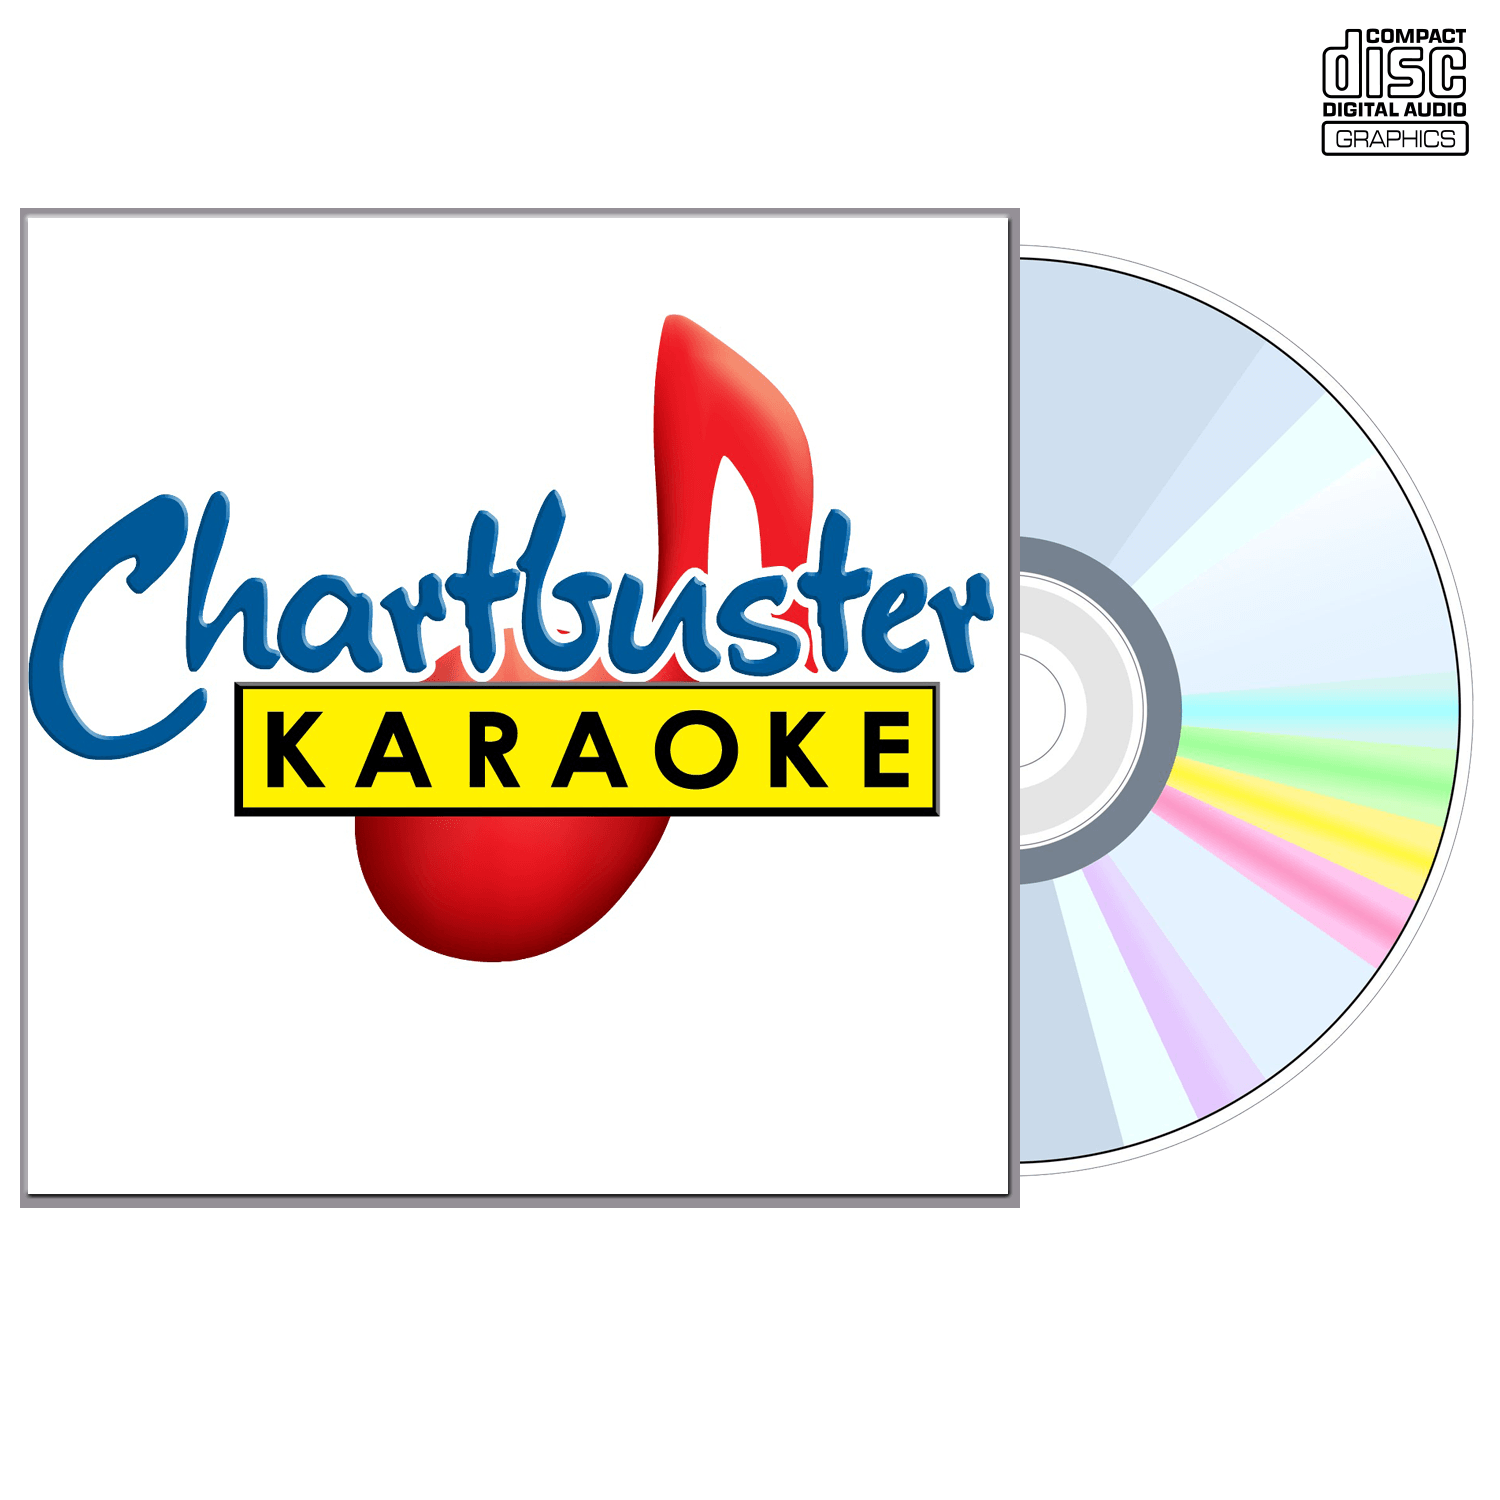 Terri Clark Vol 2 - CD+G - Chartbuster Karaoke - Karaoke Home Entertainment